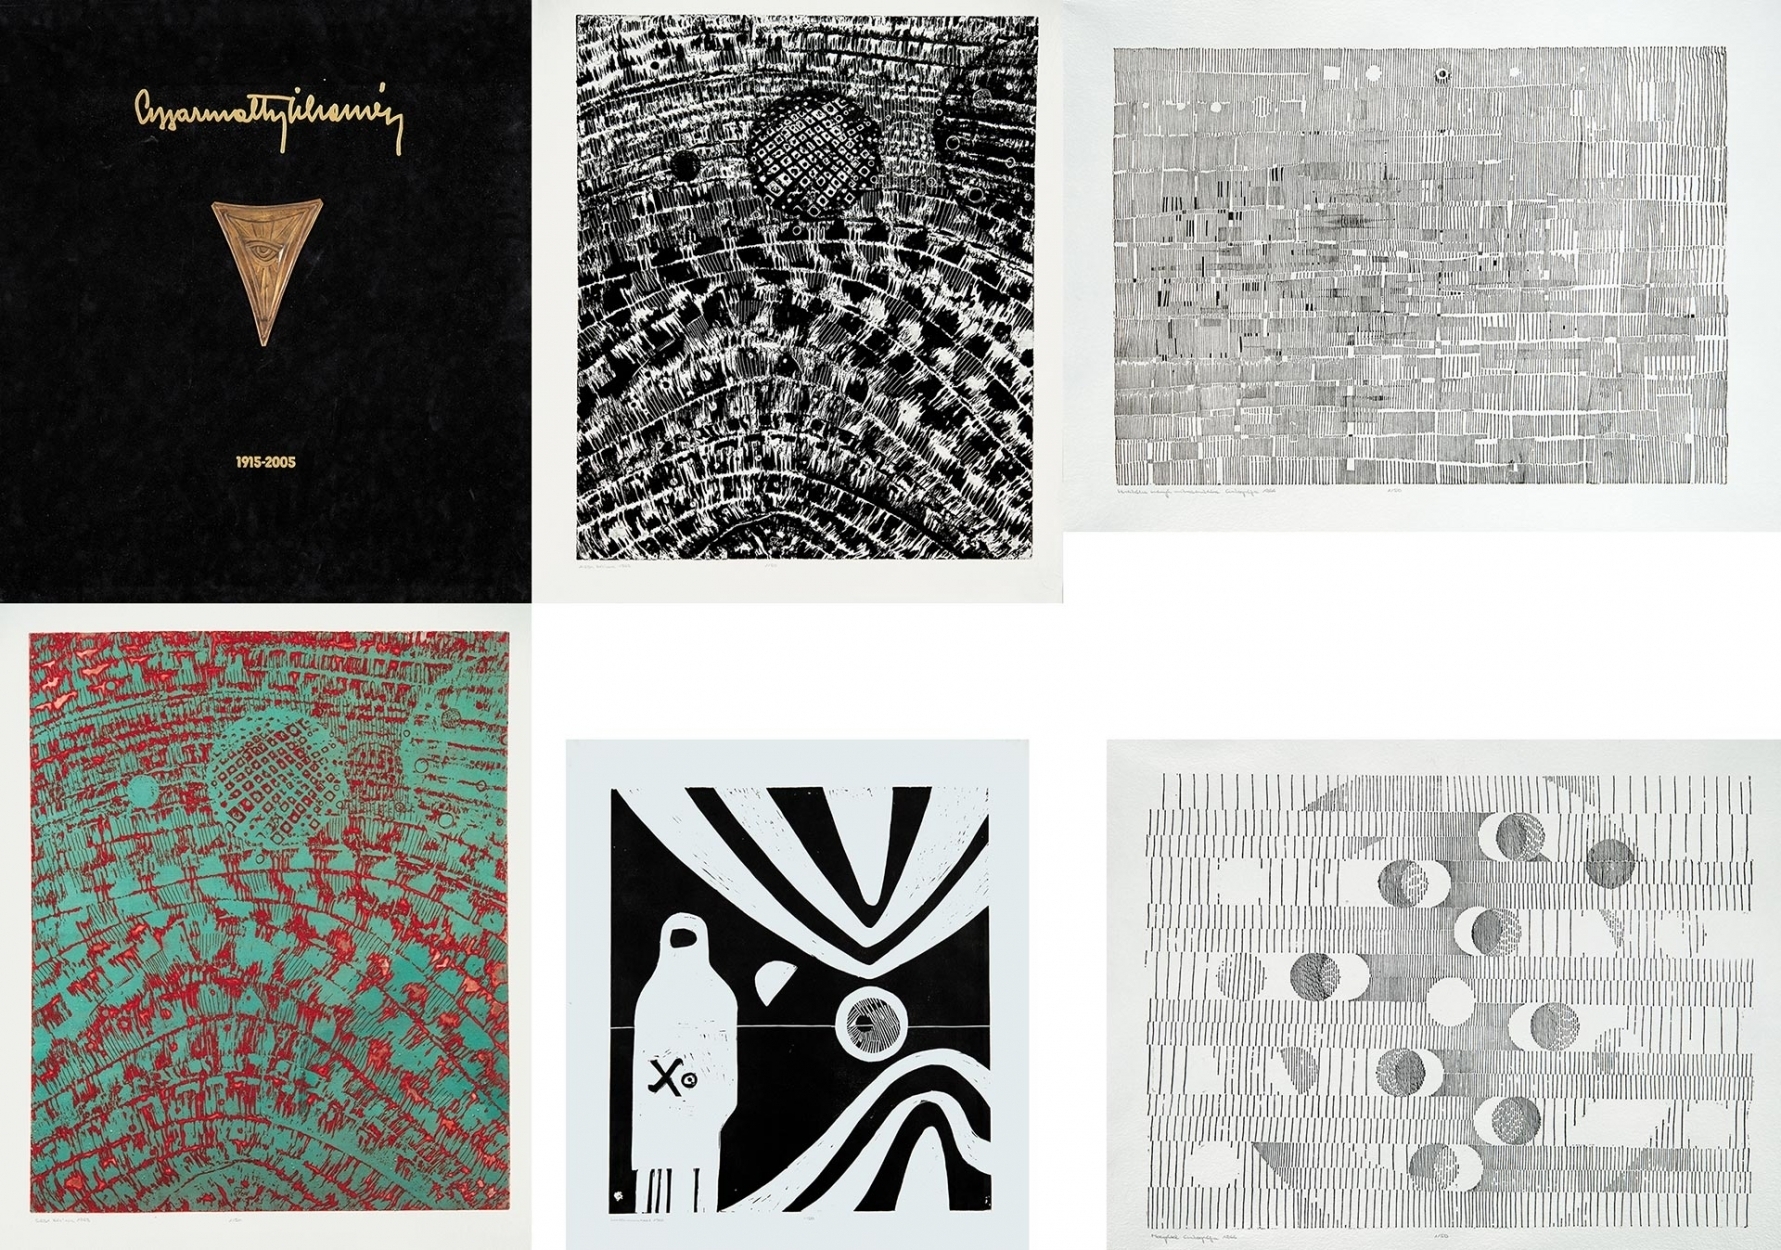 Gyarmathy Tihamér (1915-2005) Memorial Folder with 12 artworks